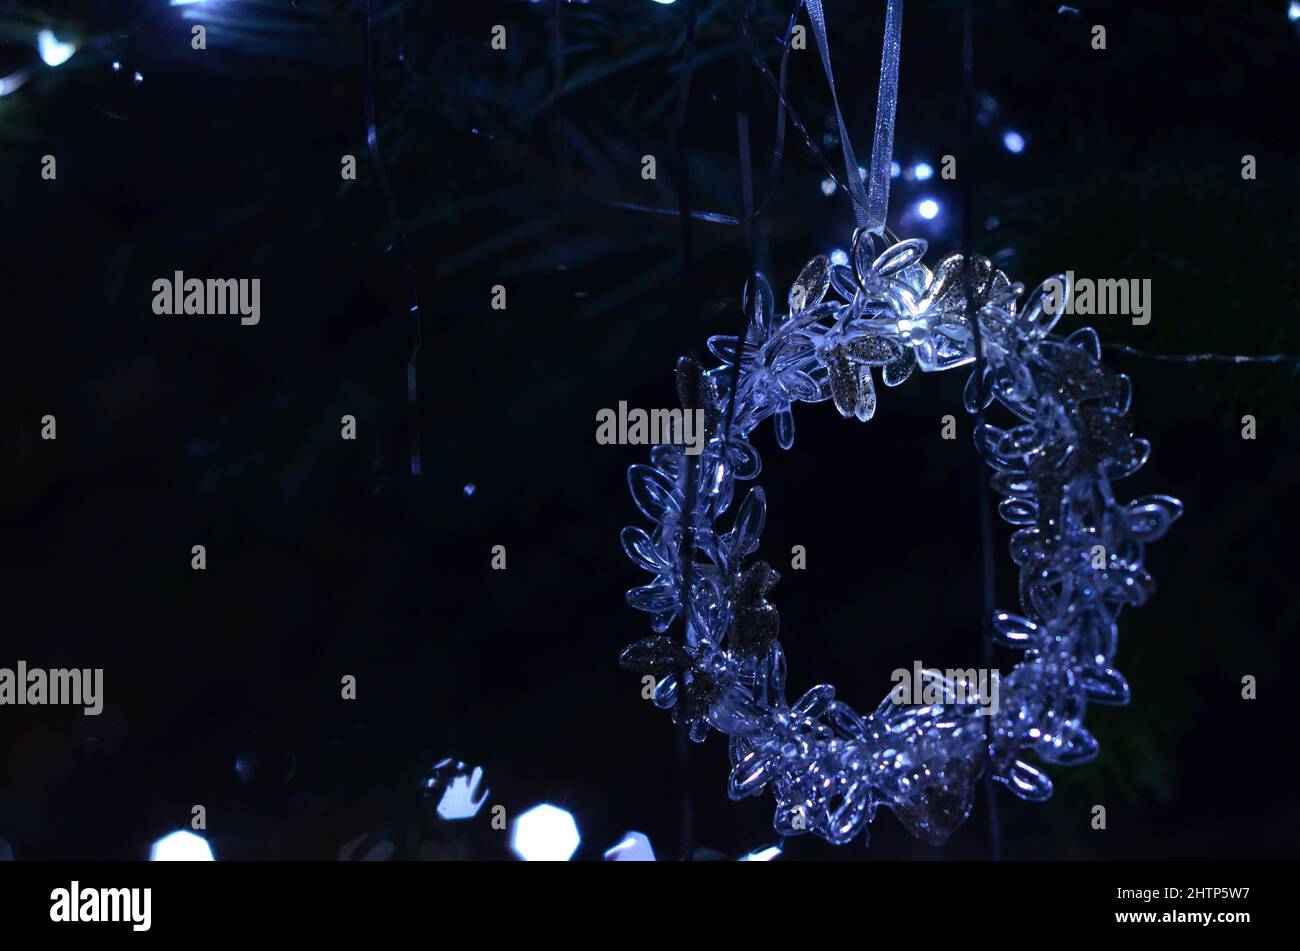 Lorbeerkranz Ornament auf dem Weihnachtsbaum aus Plastik oder Glas ; christmas wreath ornament on the christmas tree plastic or glass Stock Photo